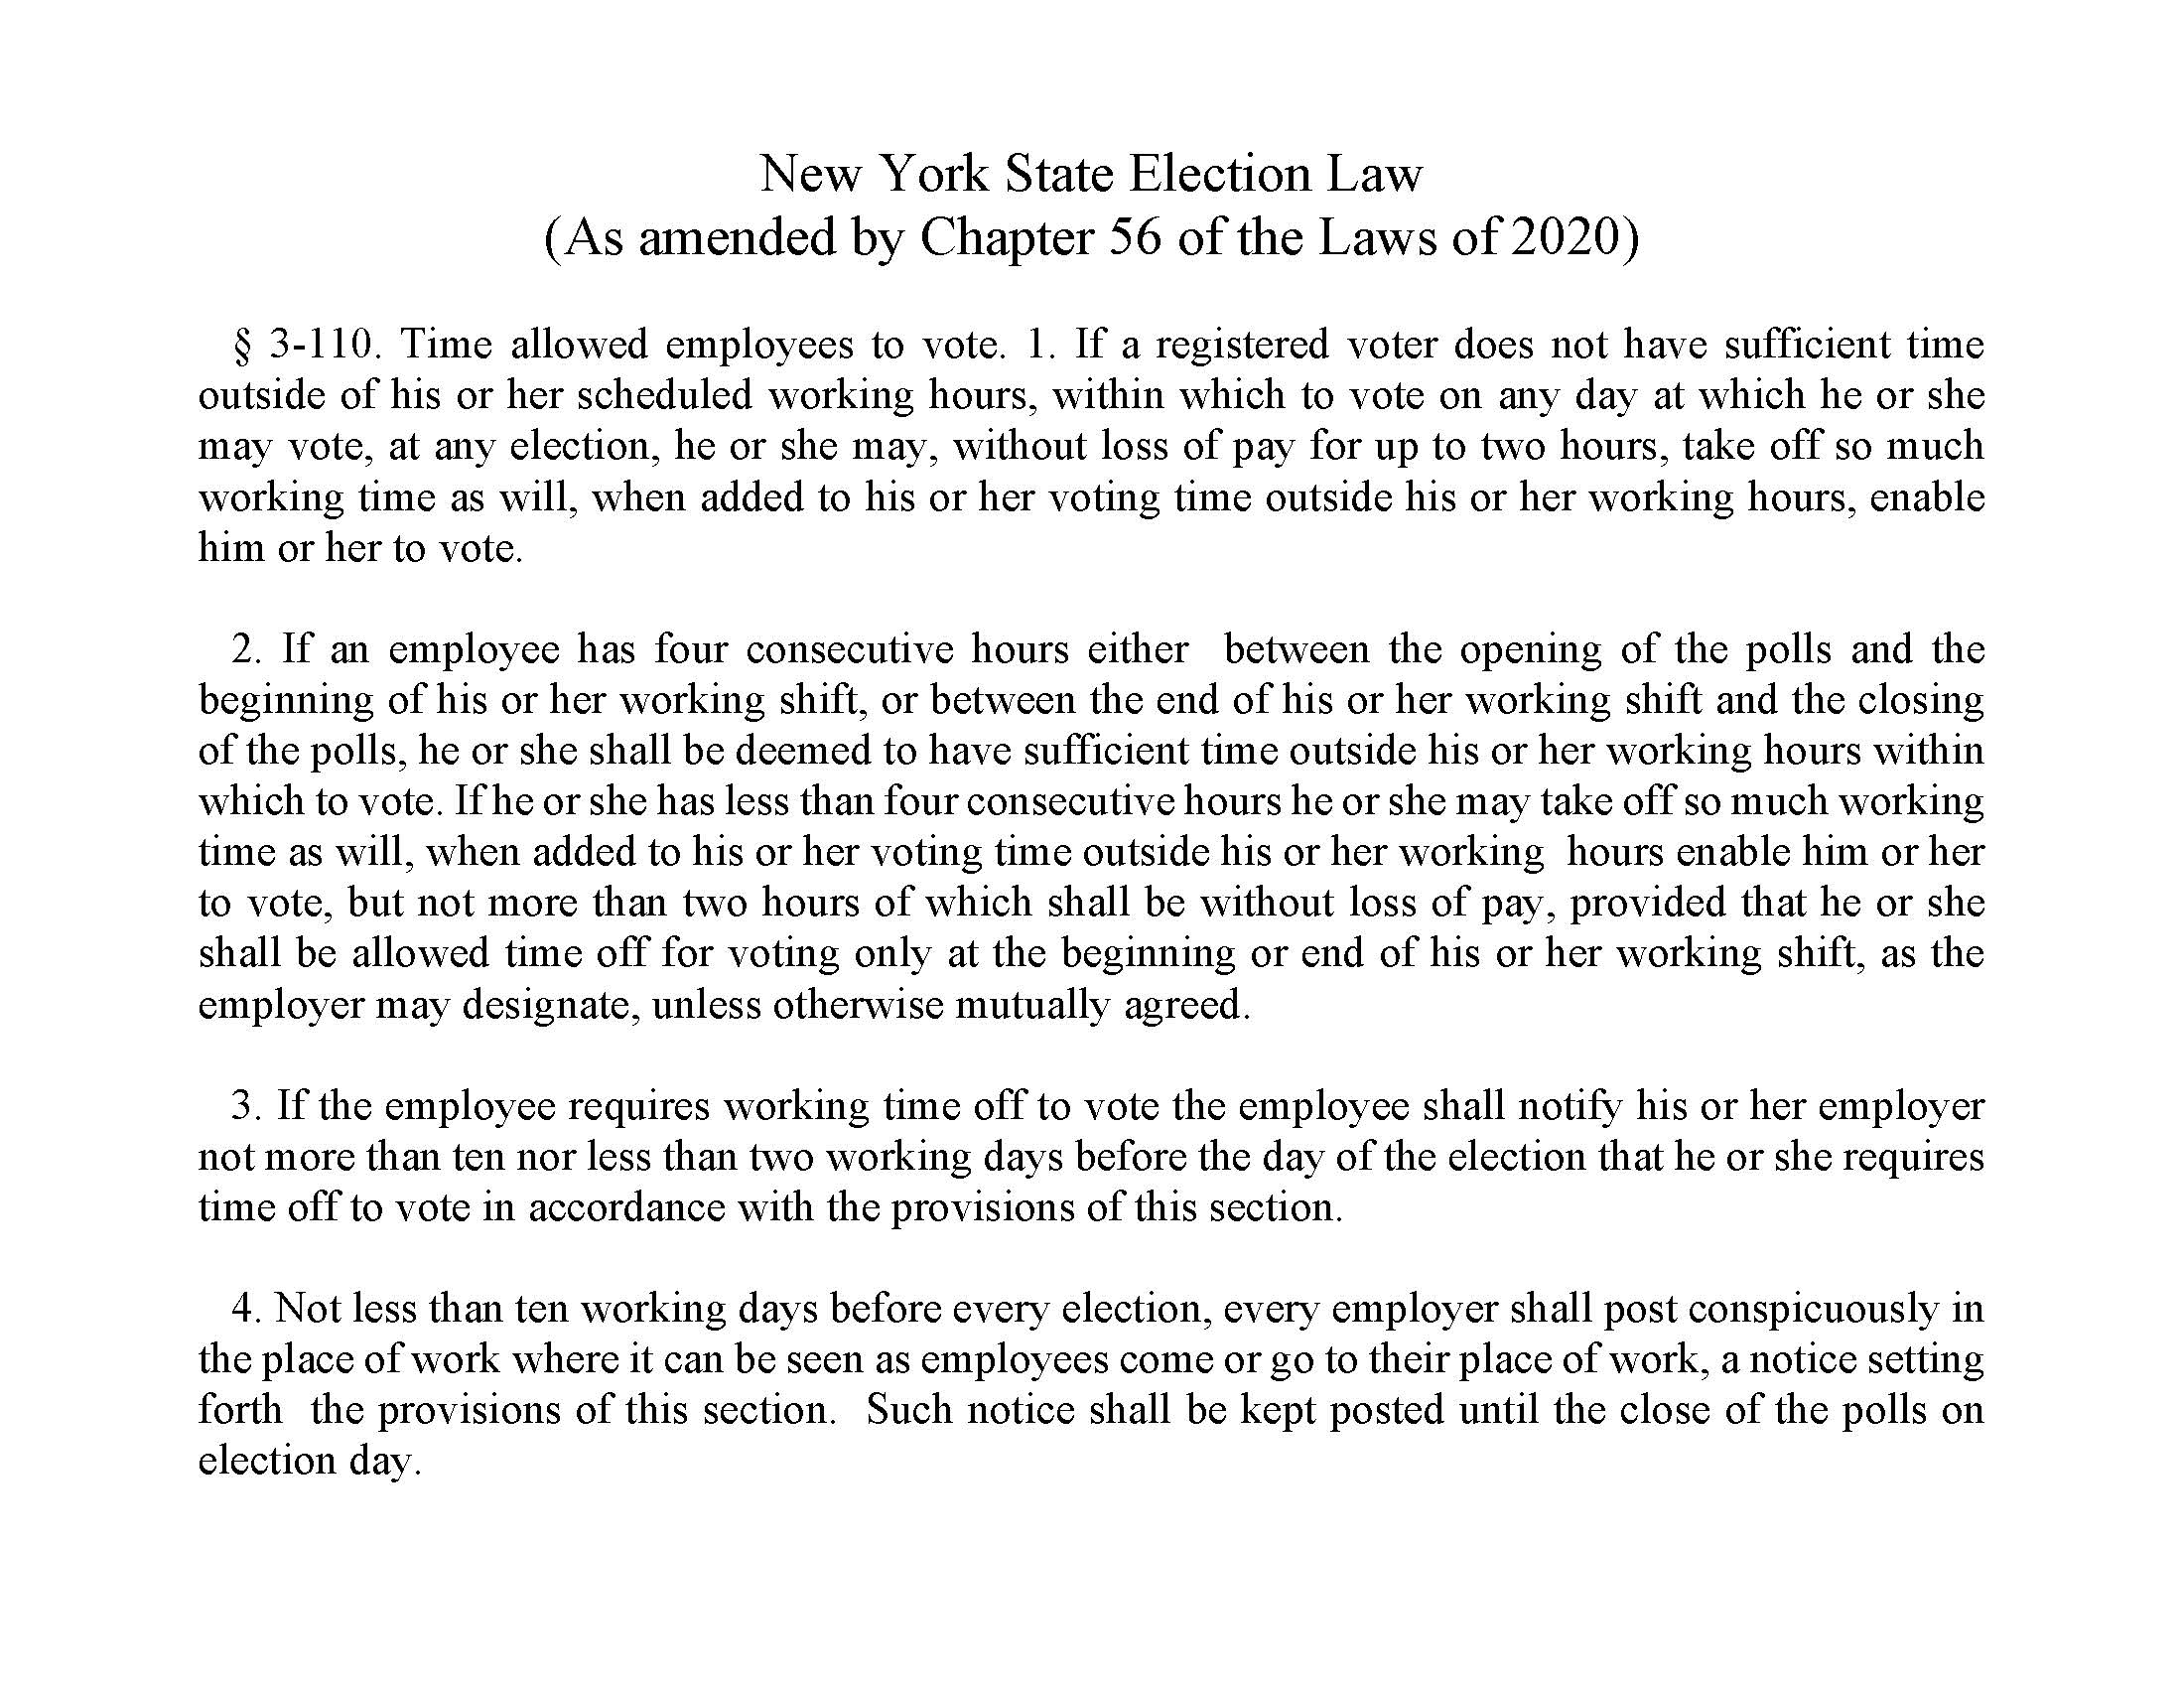 Labor Law Page 14